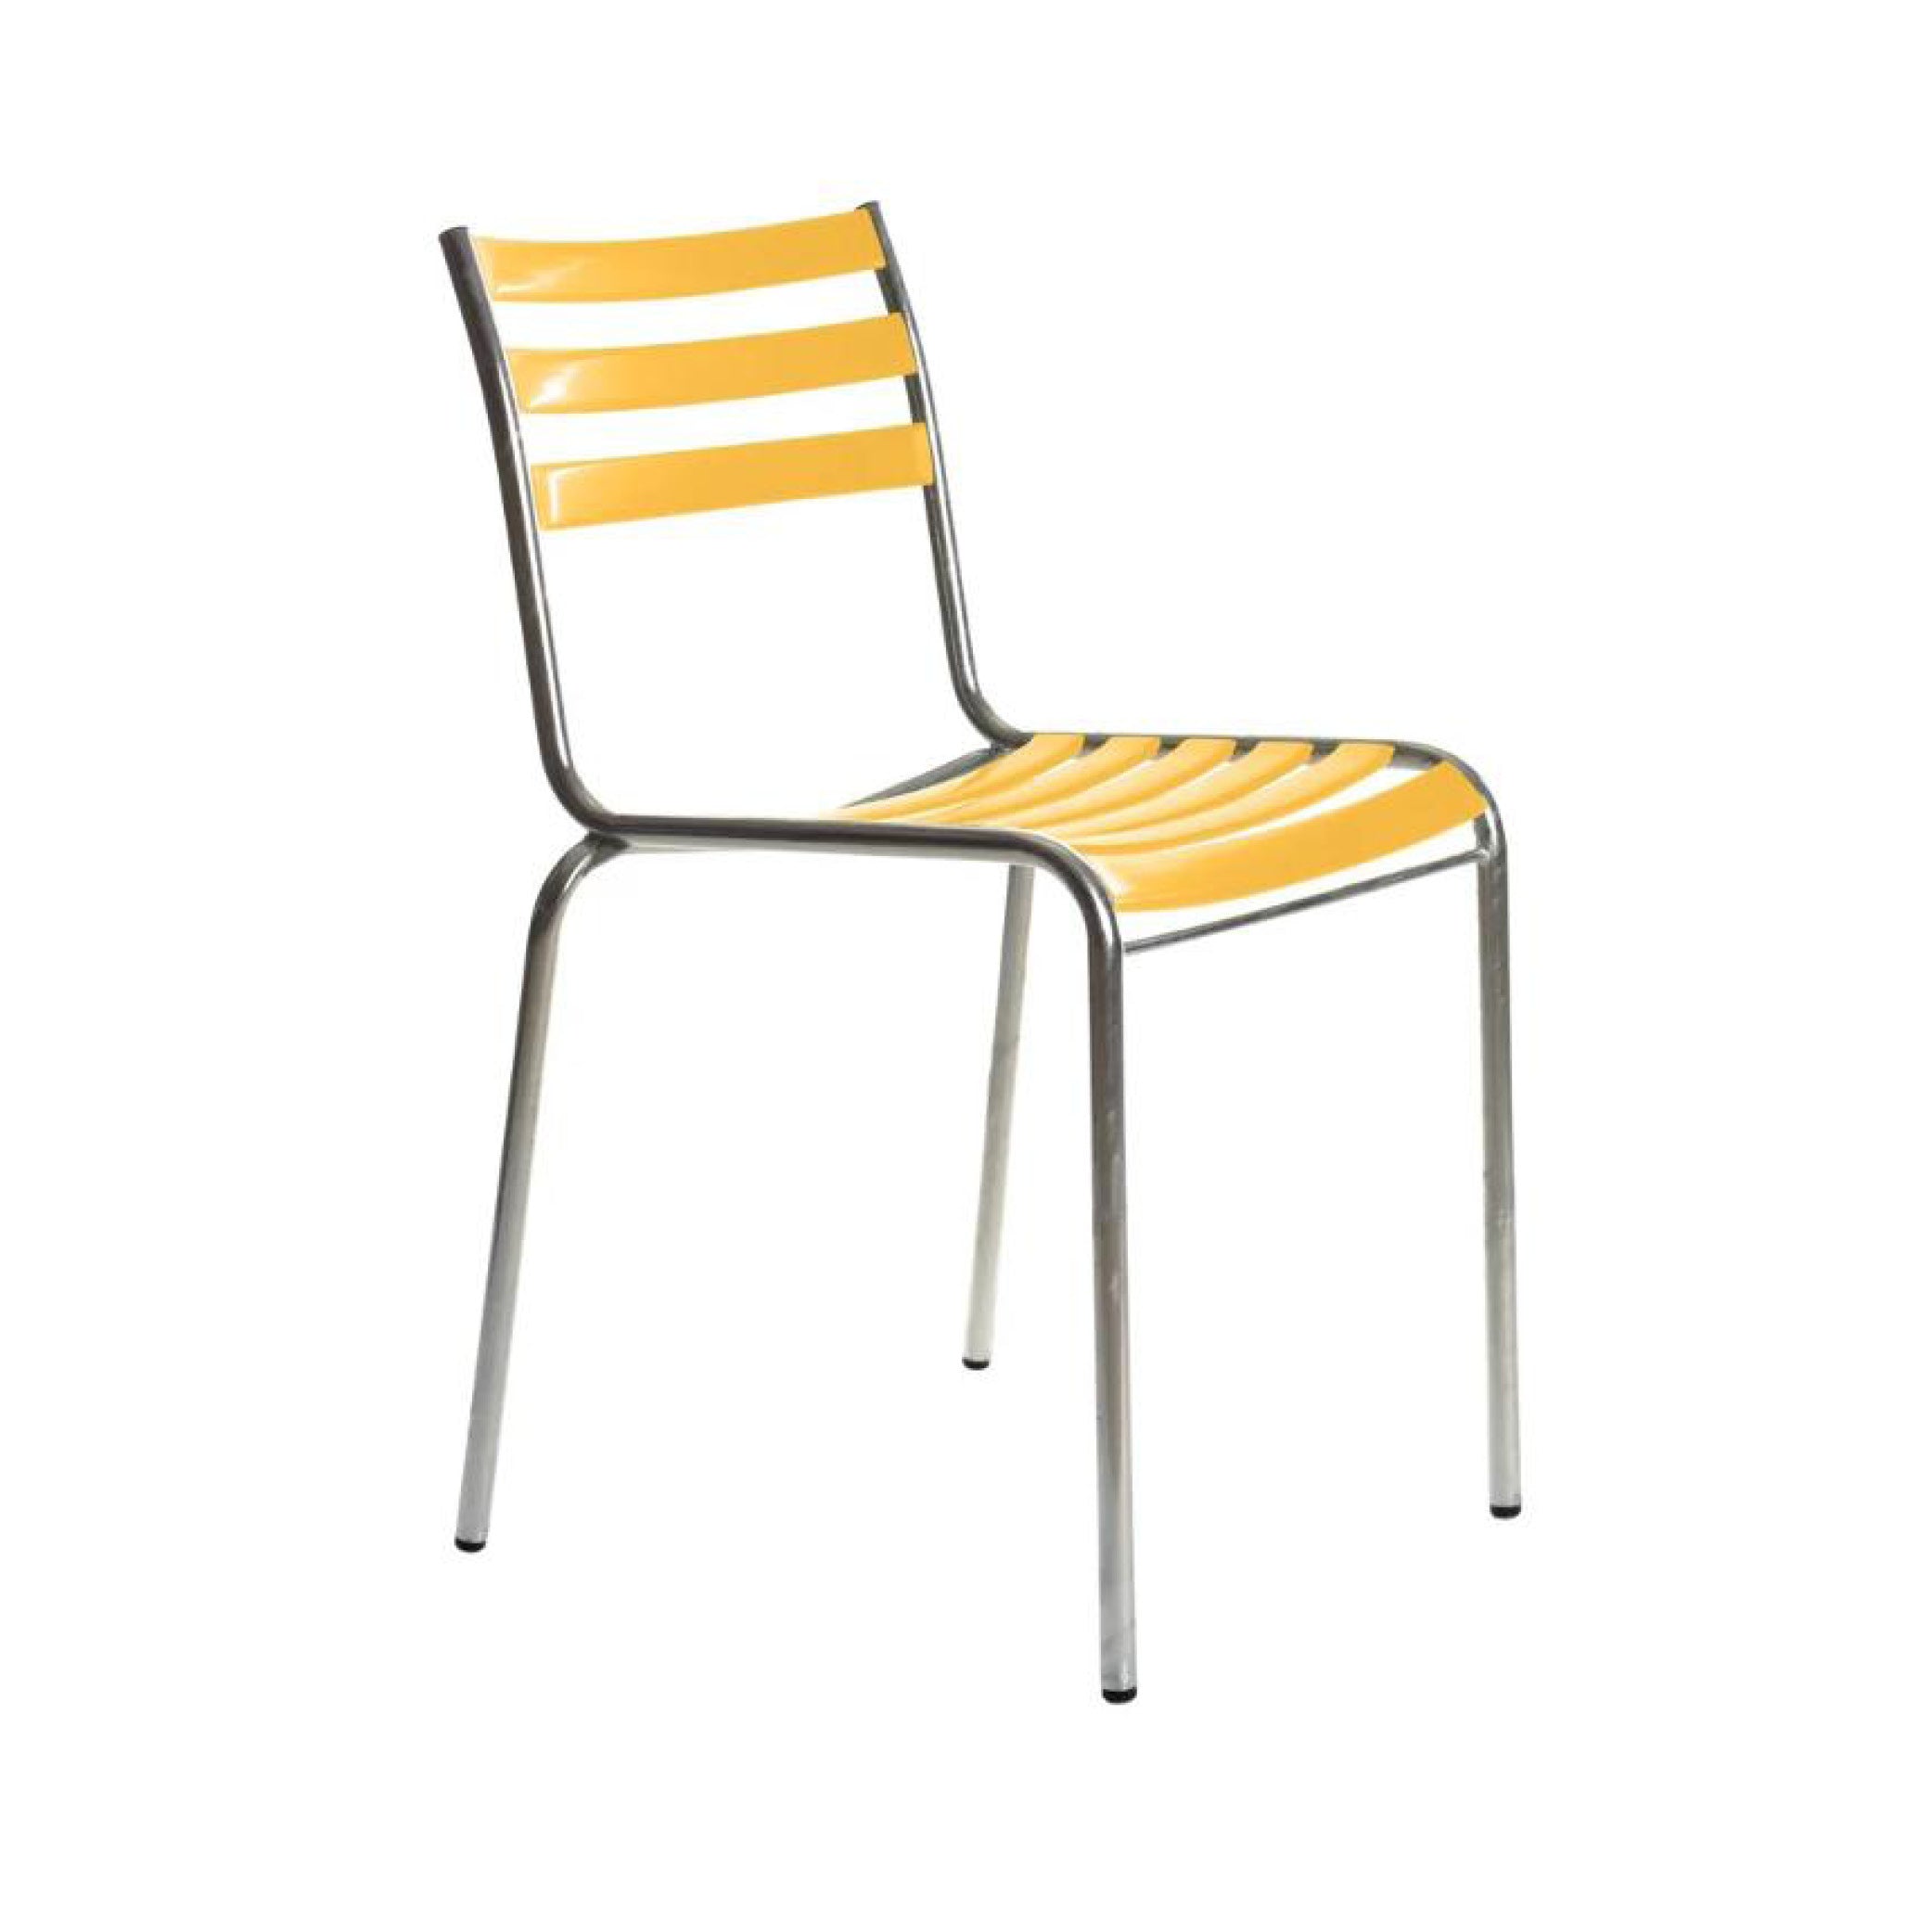 Bättig Stuhl Modell 7 von Manufakt